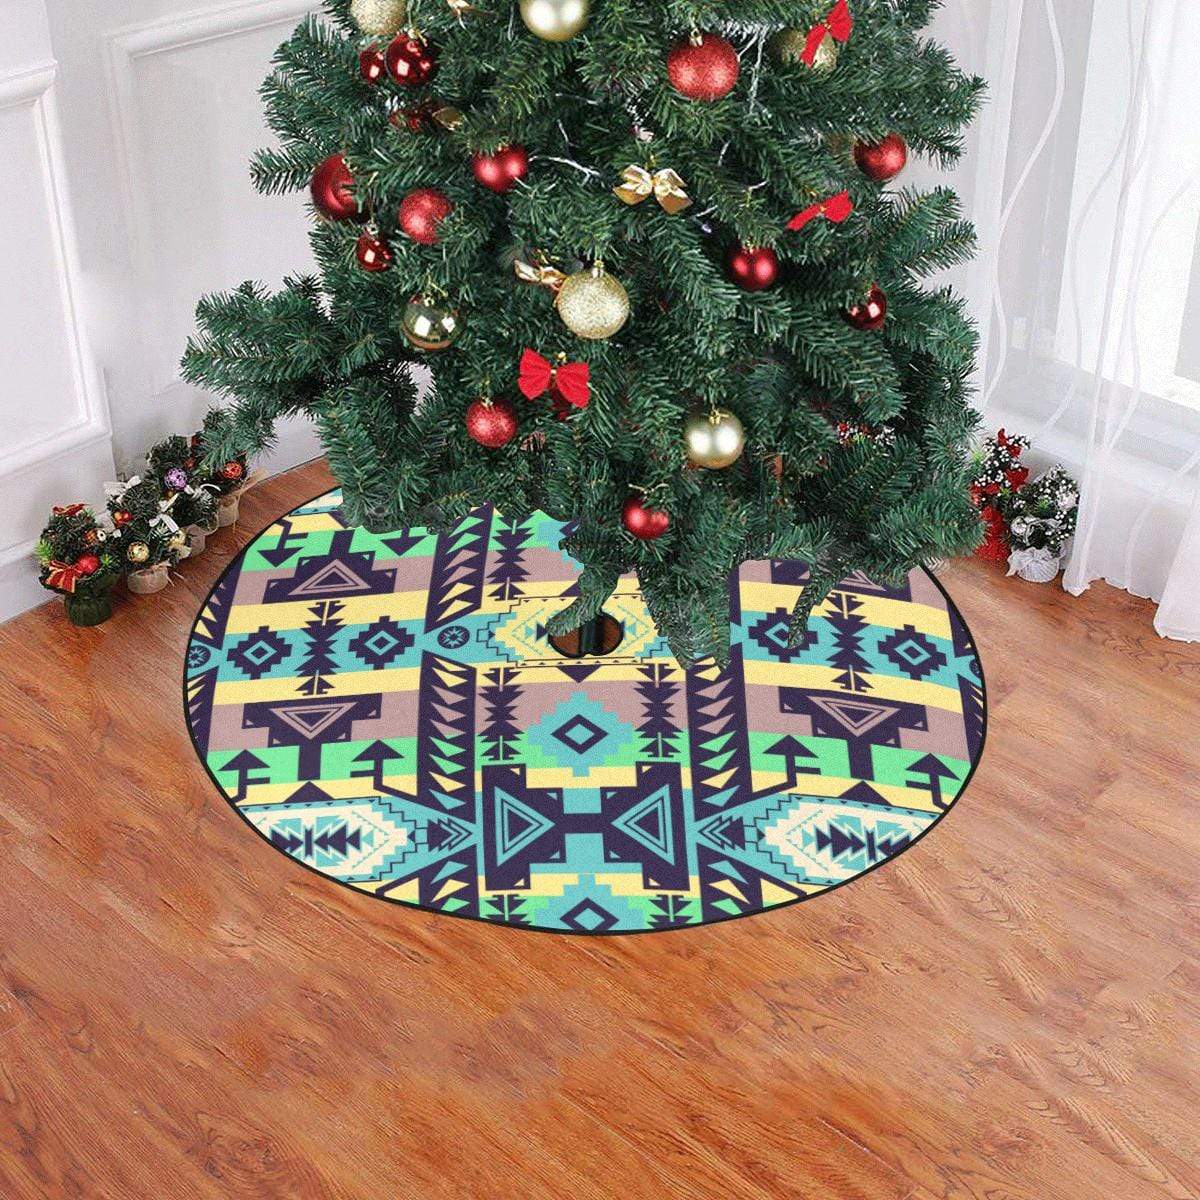 Chiefs Mountain 100 Christmas Tree Skirt 47" x 47" Christmas Tree Skirt e-joyer 